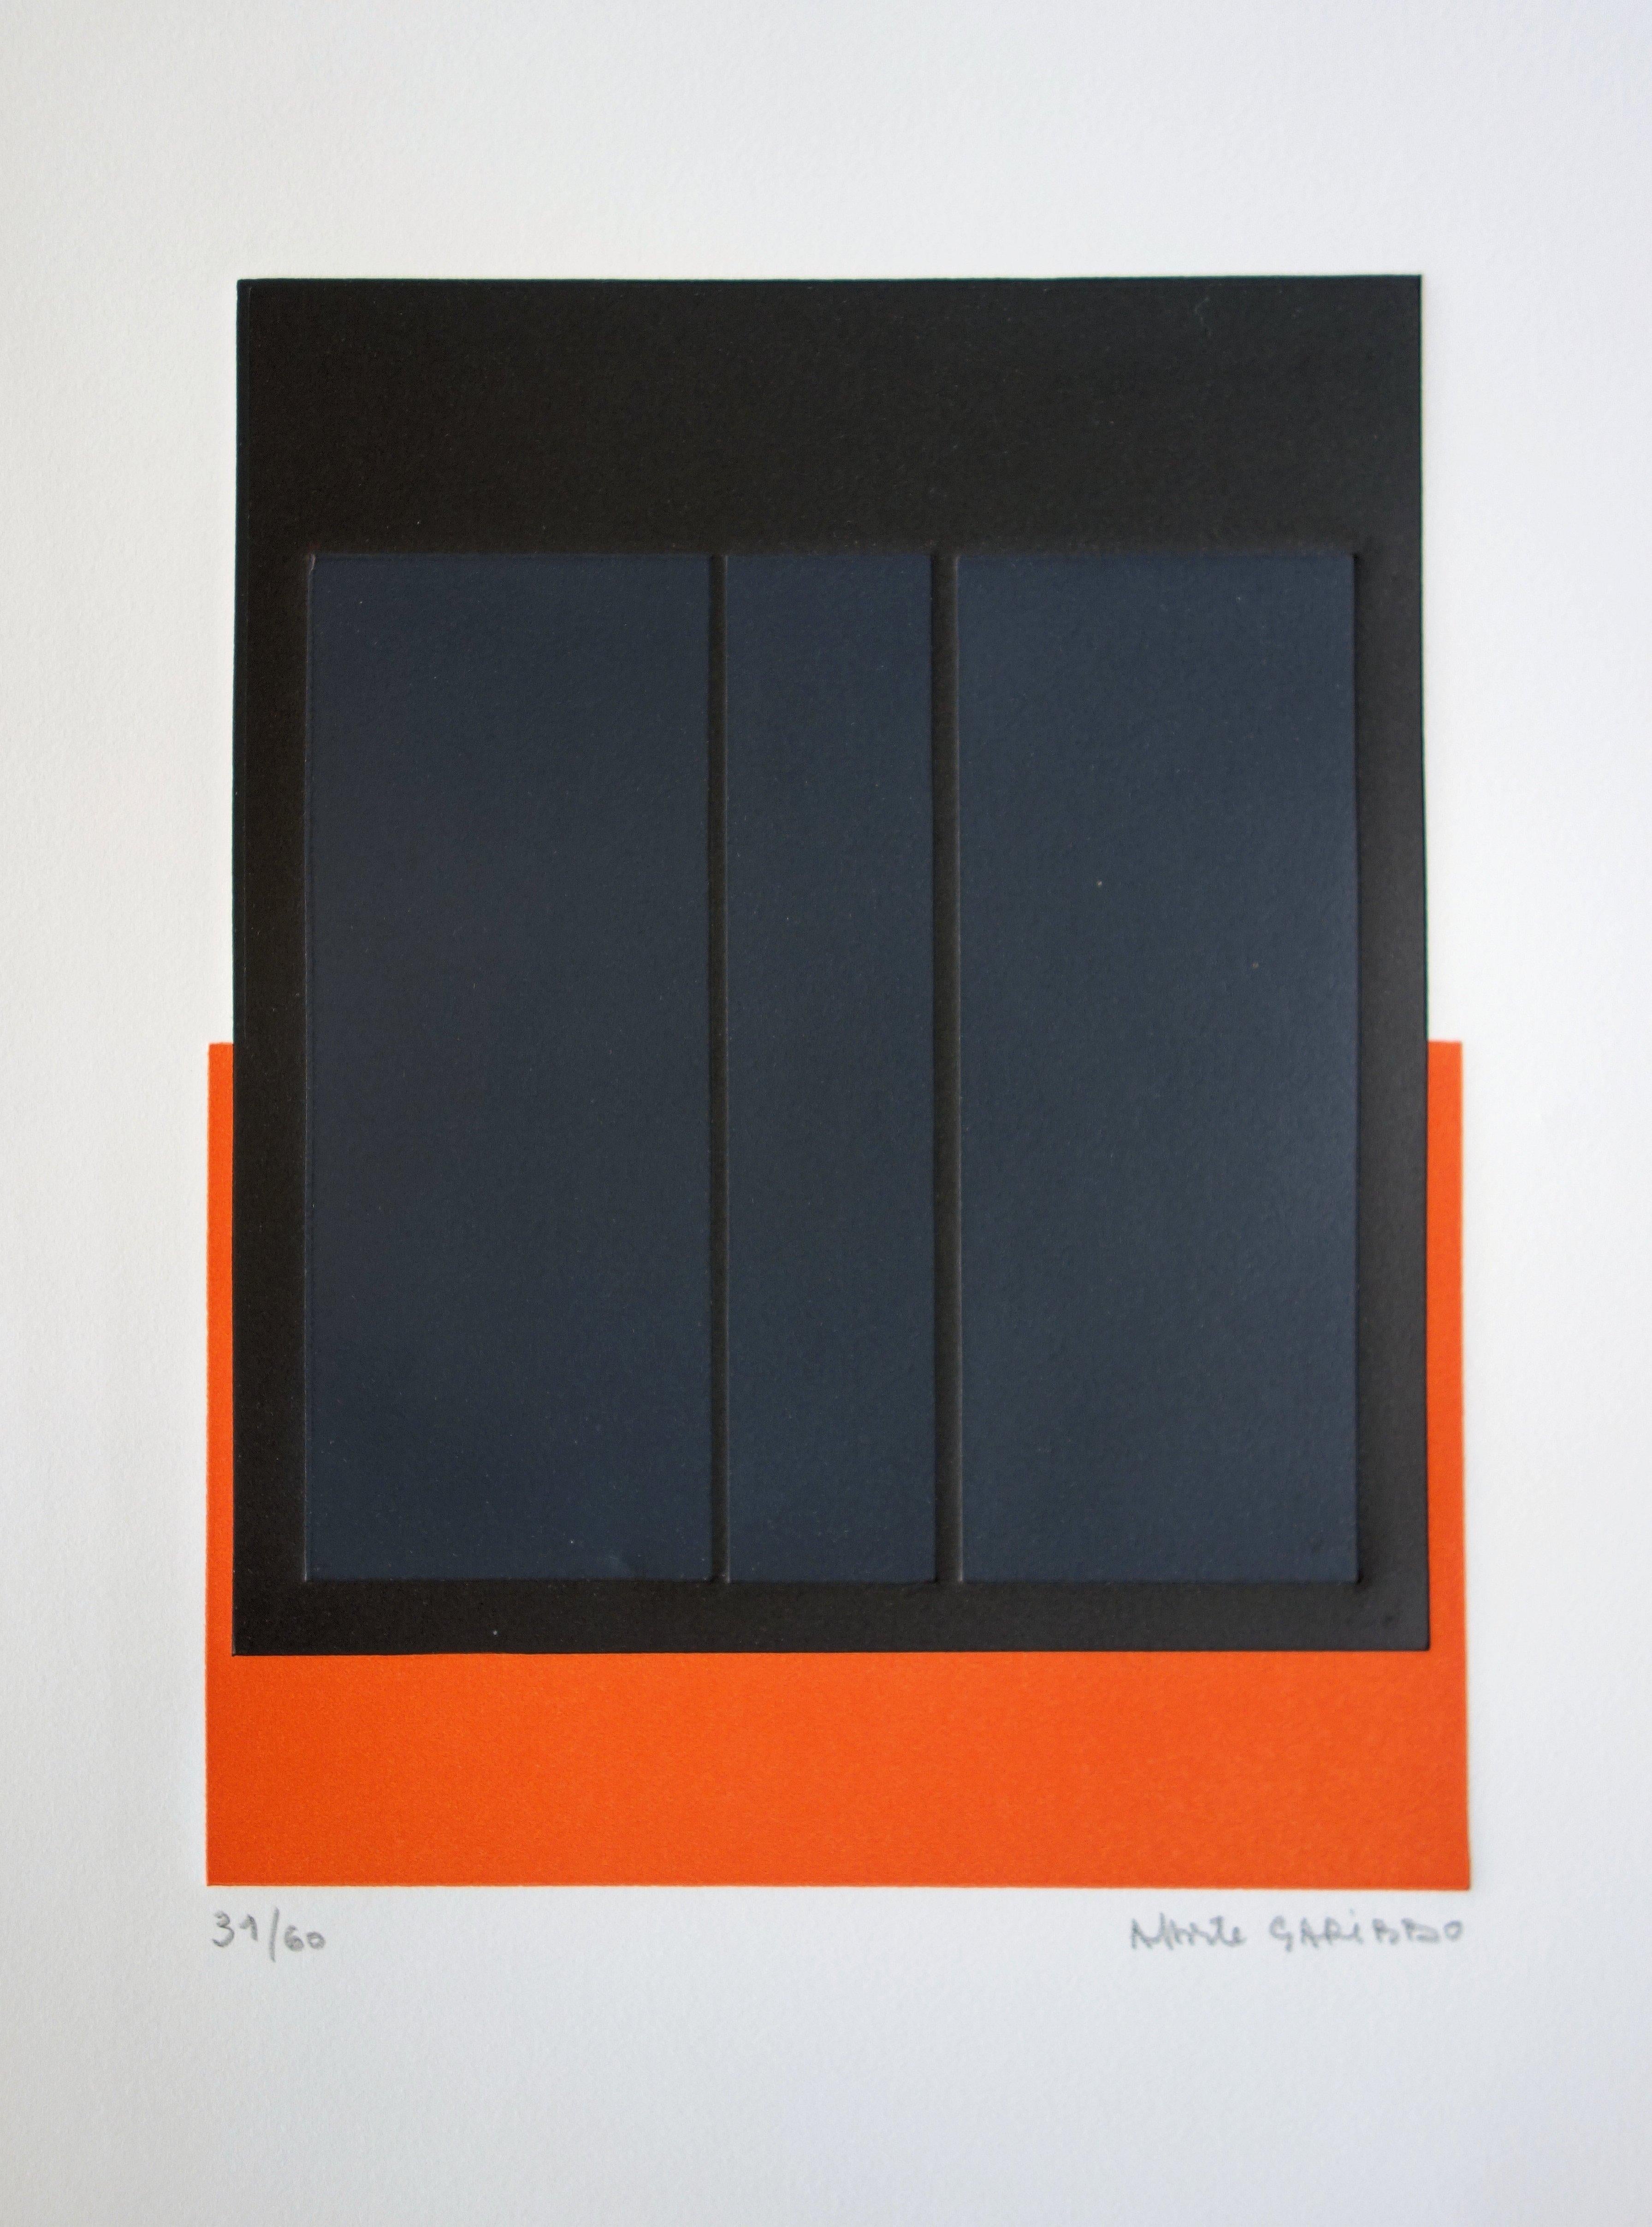 Black Squares on Orange - Original handsigned etching /60ex